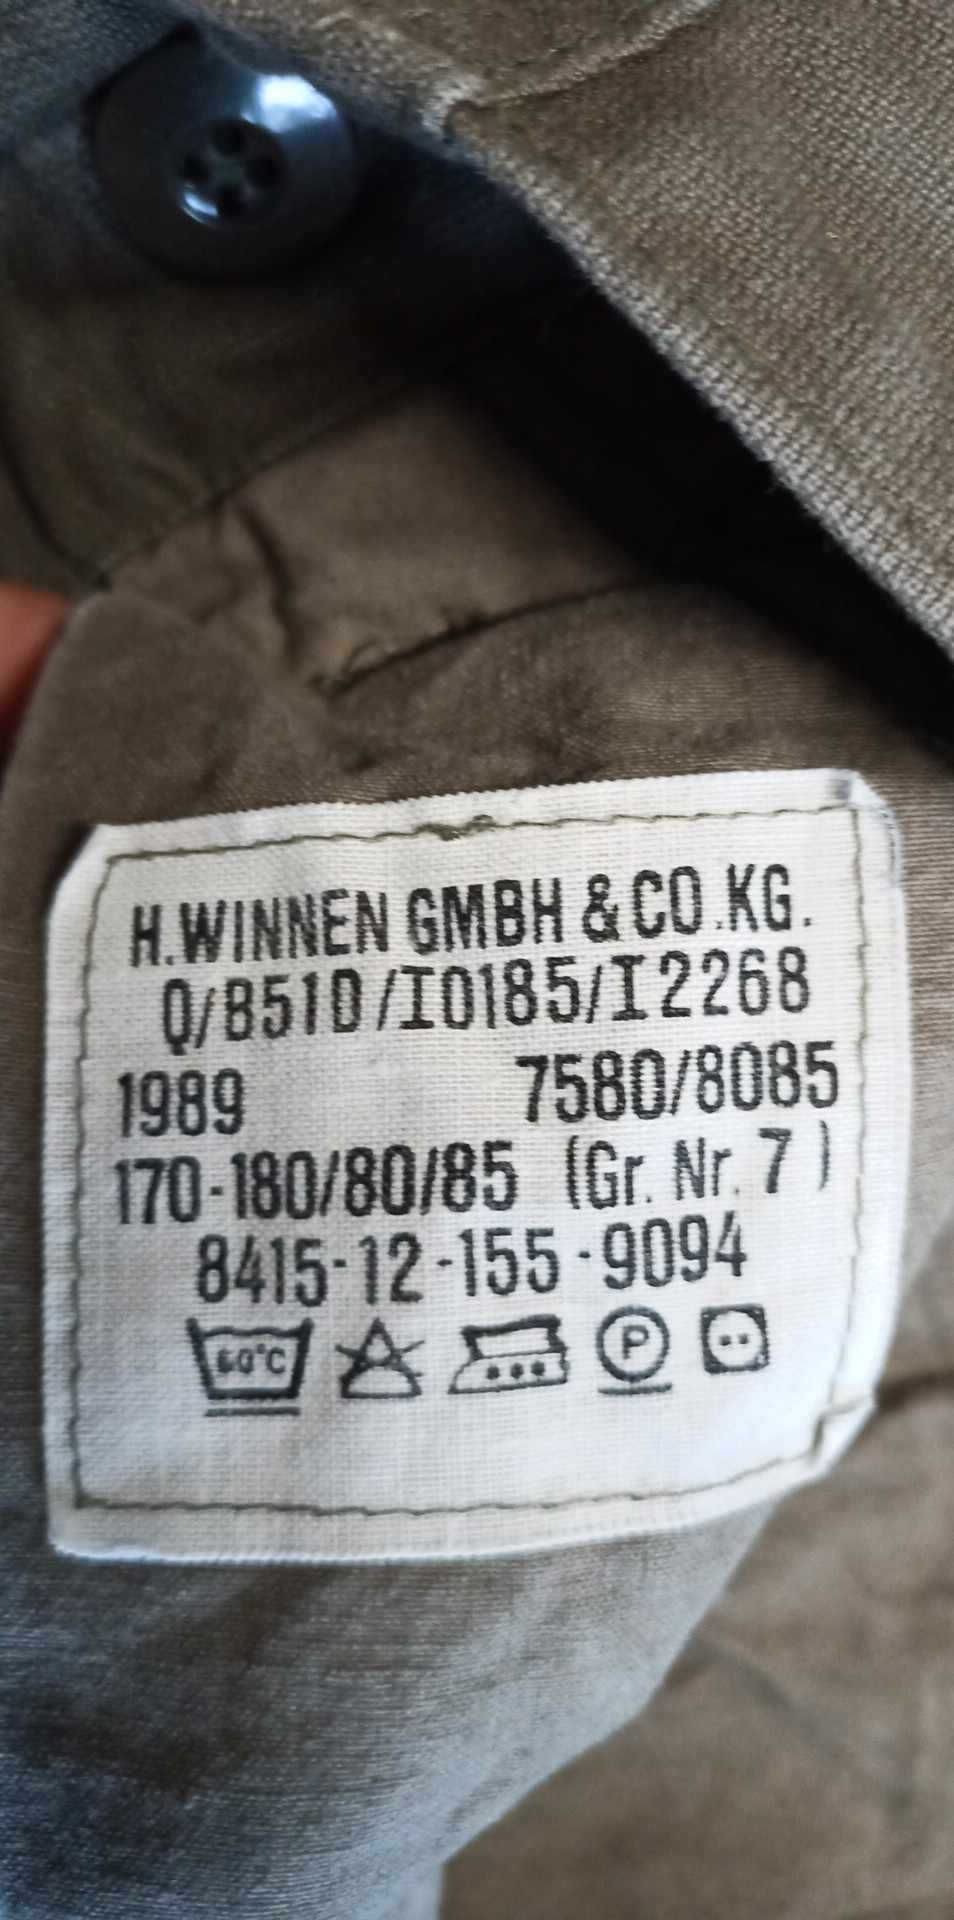 Spodnie BW Moleskin 100% cotton r.GR7 /170-180/80/85 pas86